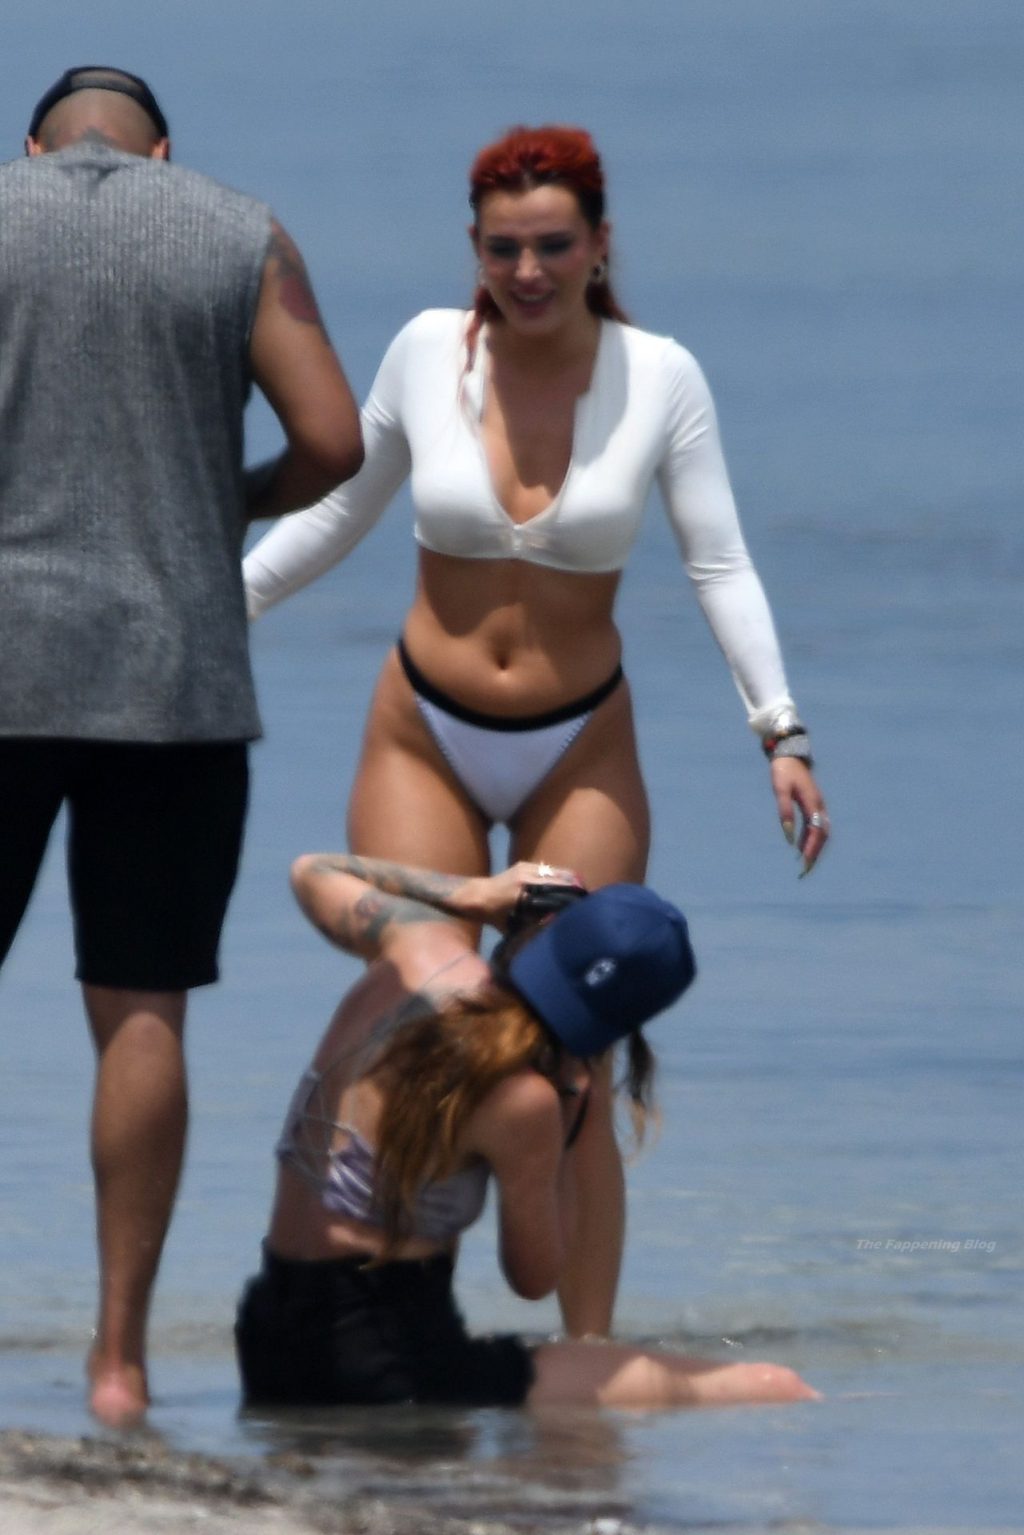 Bella Thorne Poses in a White Bikini During a Photoshoot on the Beach in Miami (54 Photos)